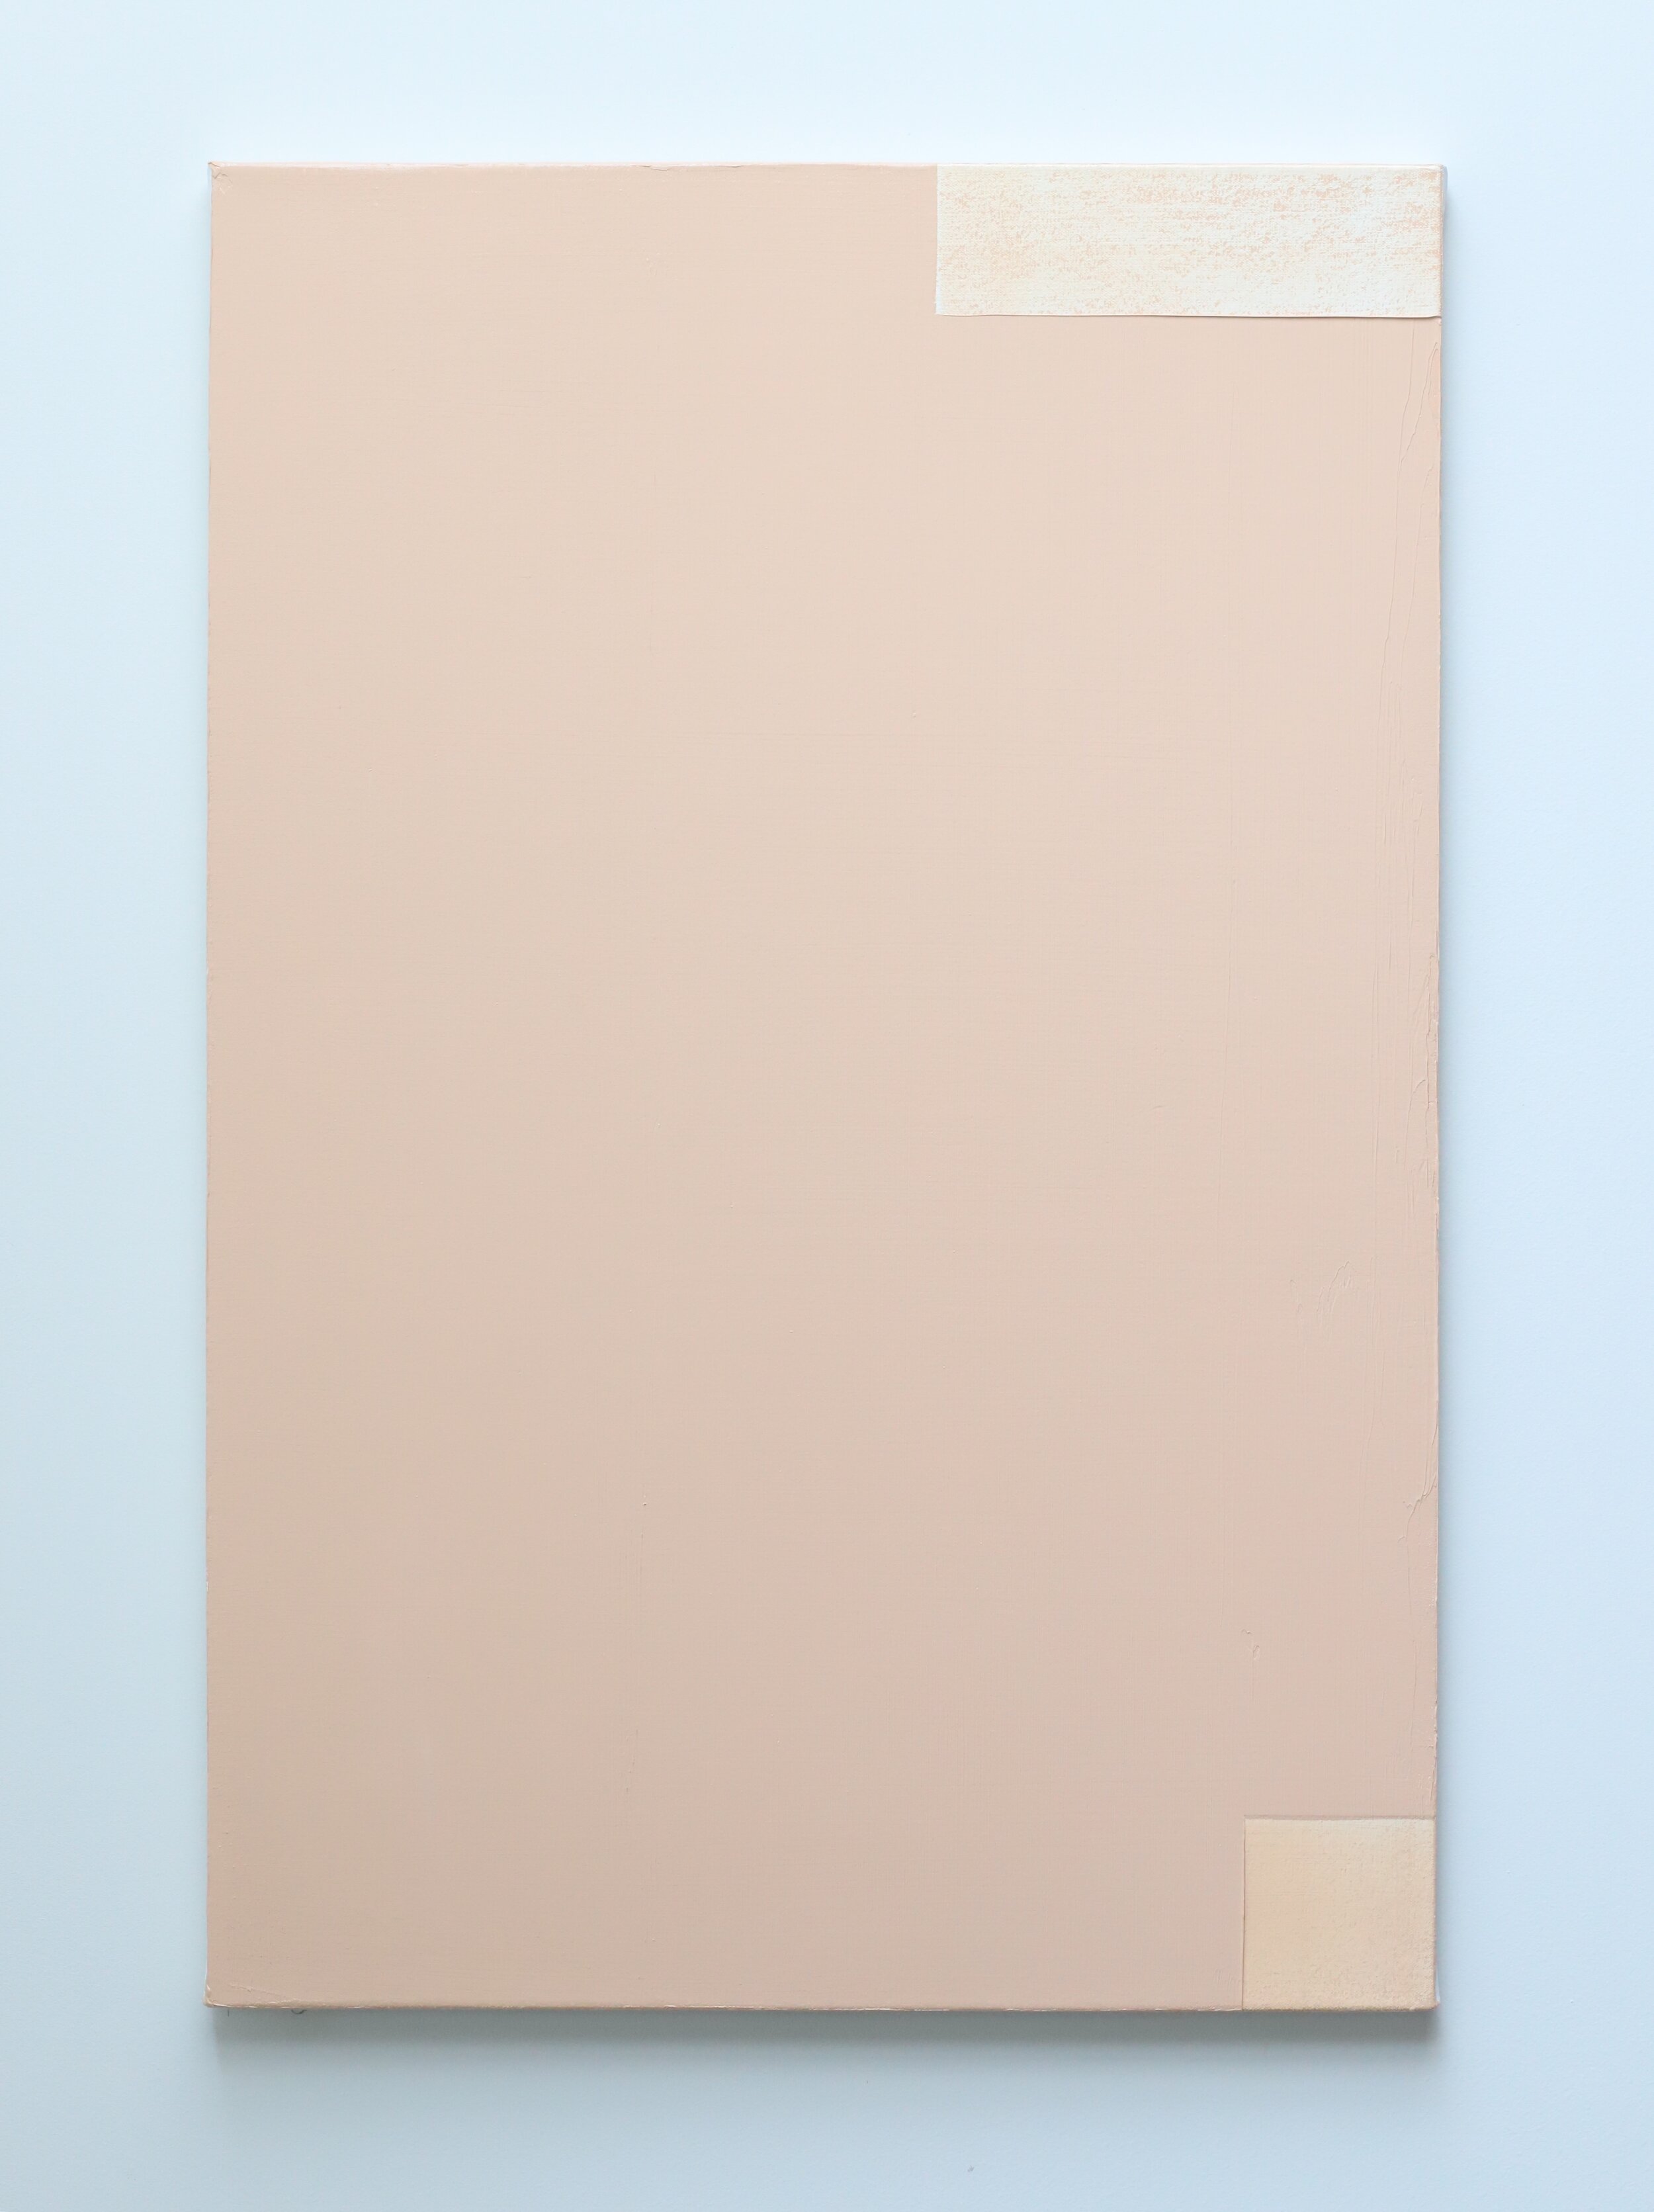  Figuration 20. 3 (한빛), oil on canvas, 91x61cm, 2020 